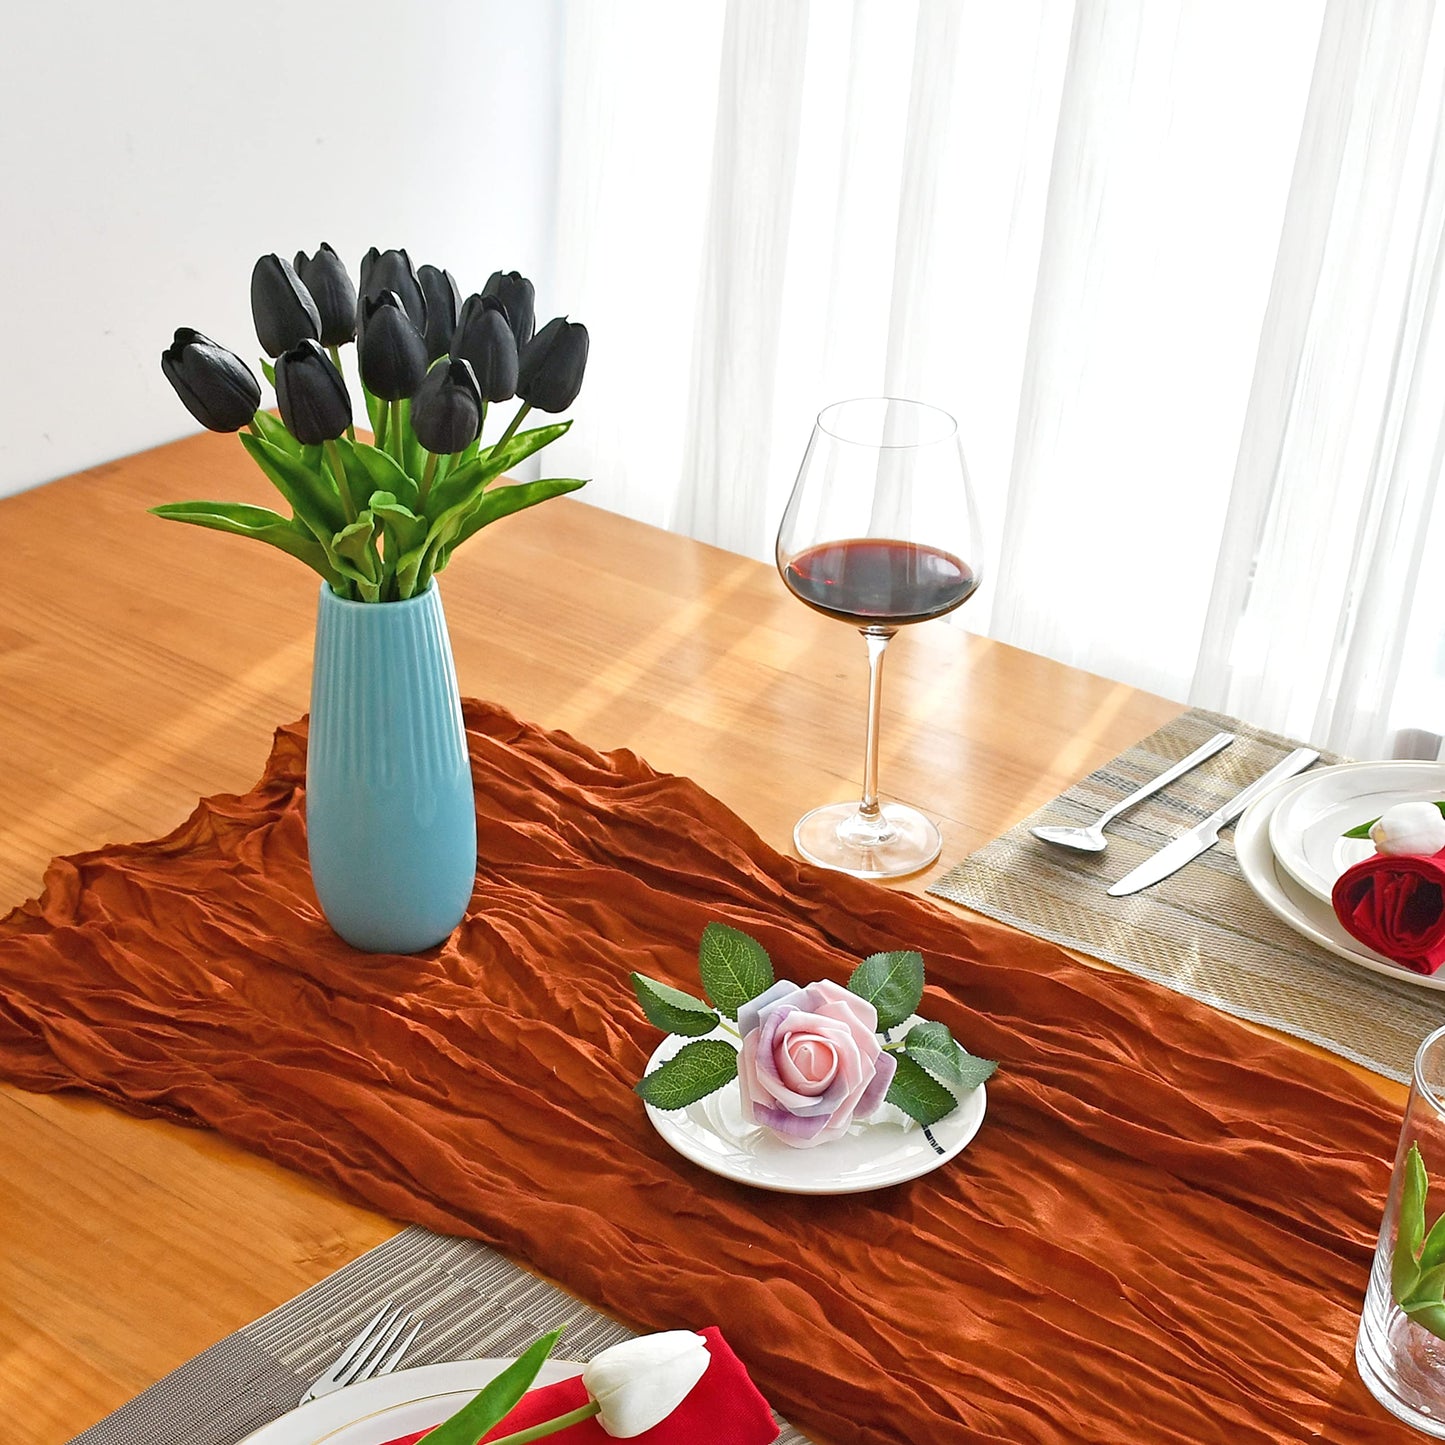 Mandy's 28pcs Black Artificial Tulip Silk Flowers 13.5" for Halloween in Bulk Home Kitchen Wedding Decorations